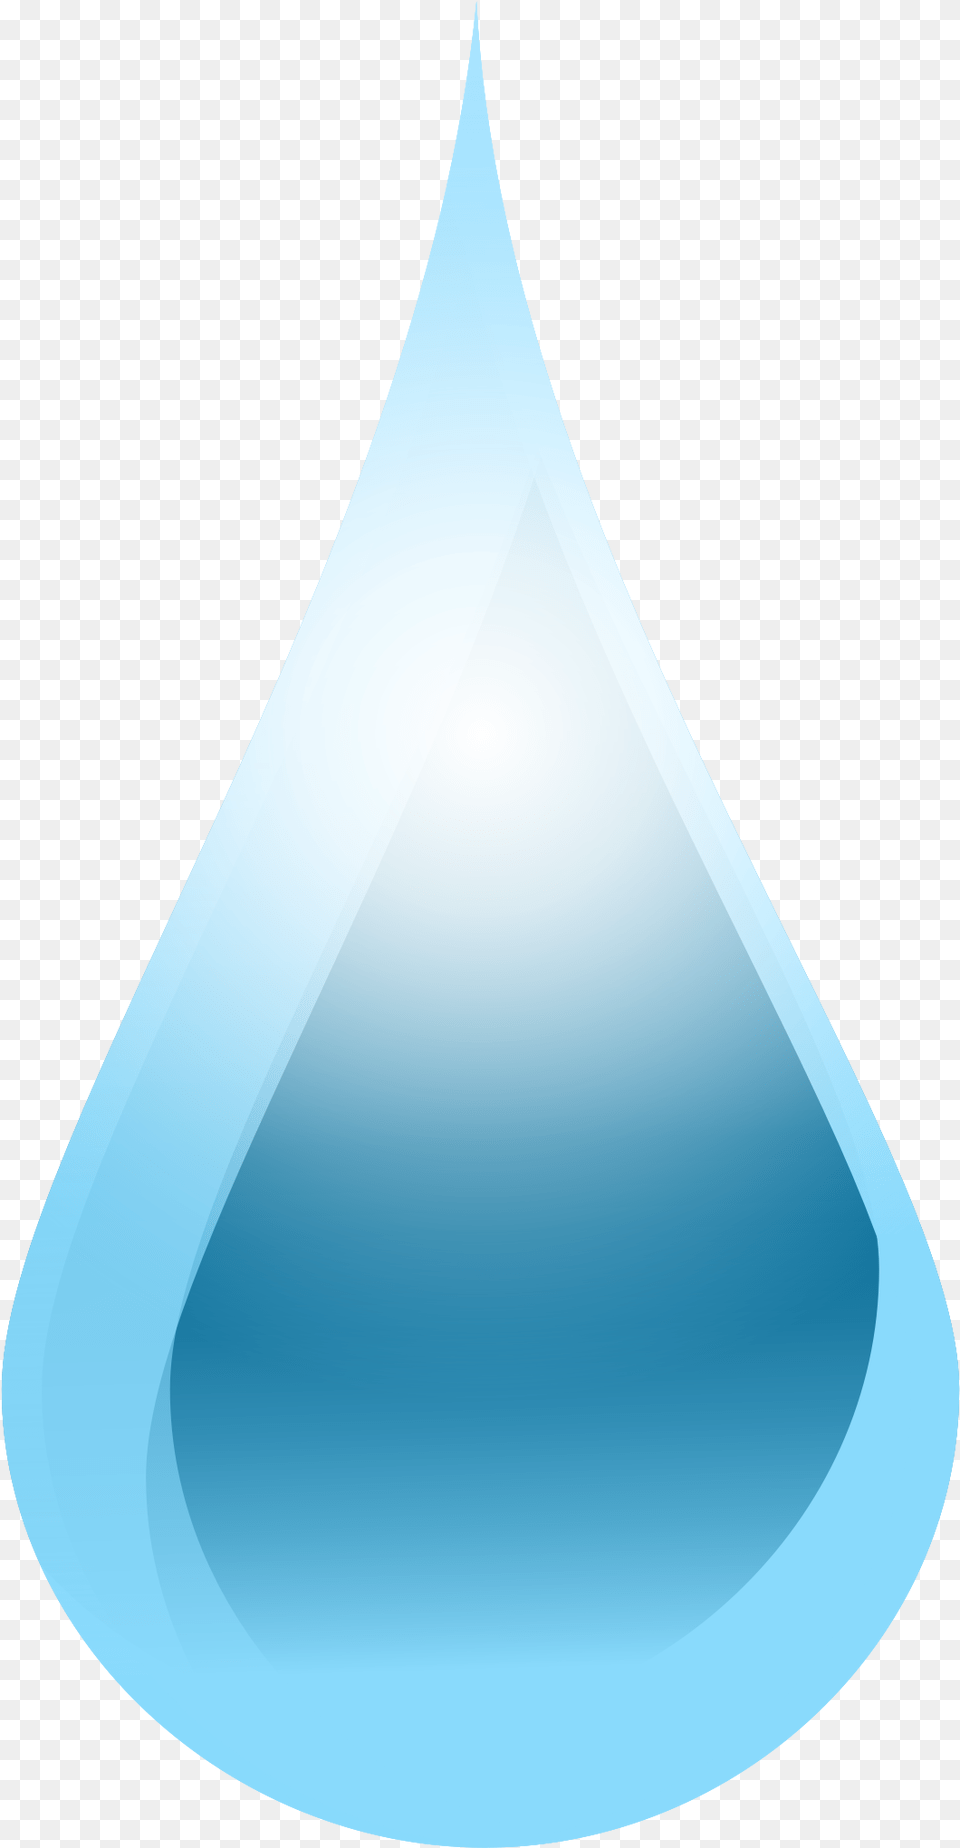 Svg Stock Drop Big Image Water Drop Image Gotas De Agua Dibujo, Droplet, Triangle Free Transparent Png